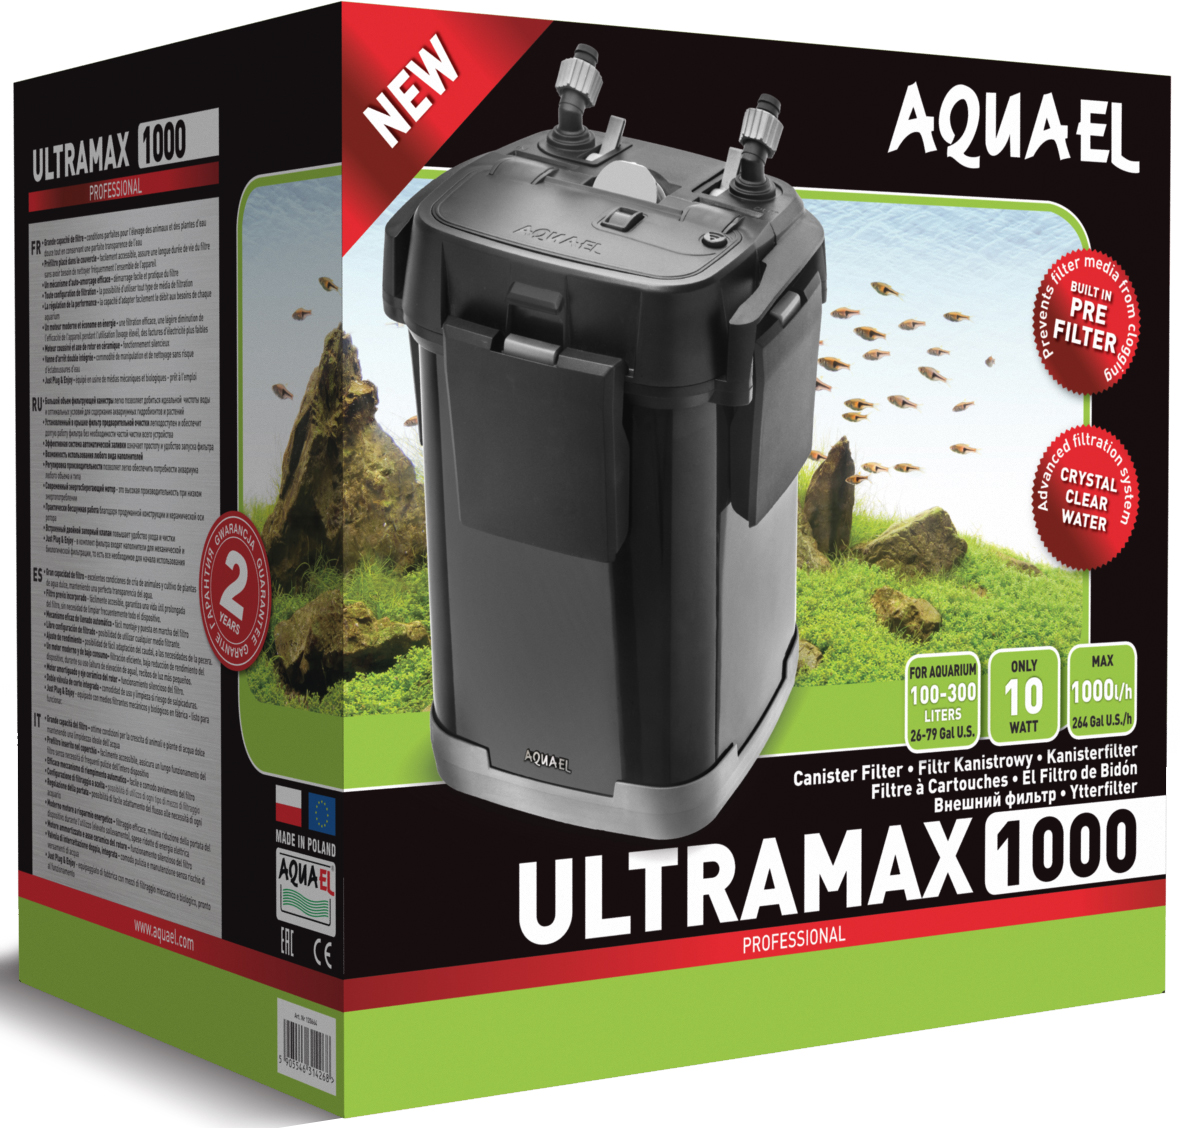 ULTRAMAX 1000